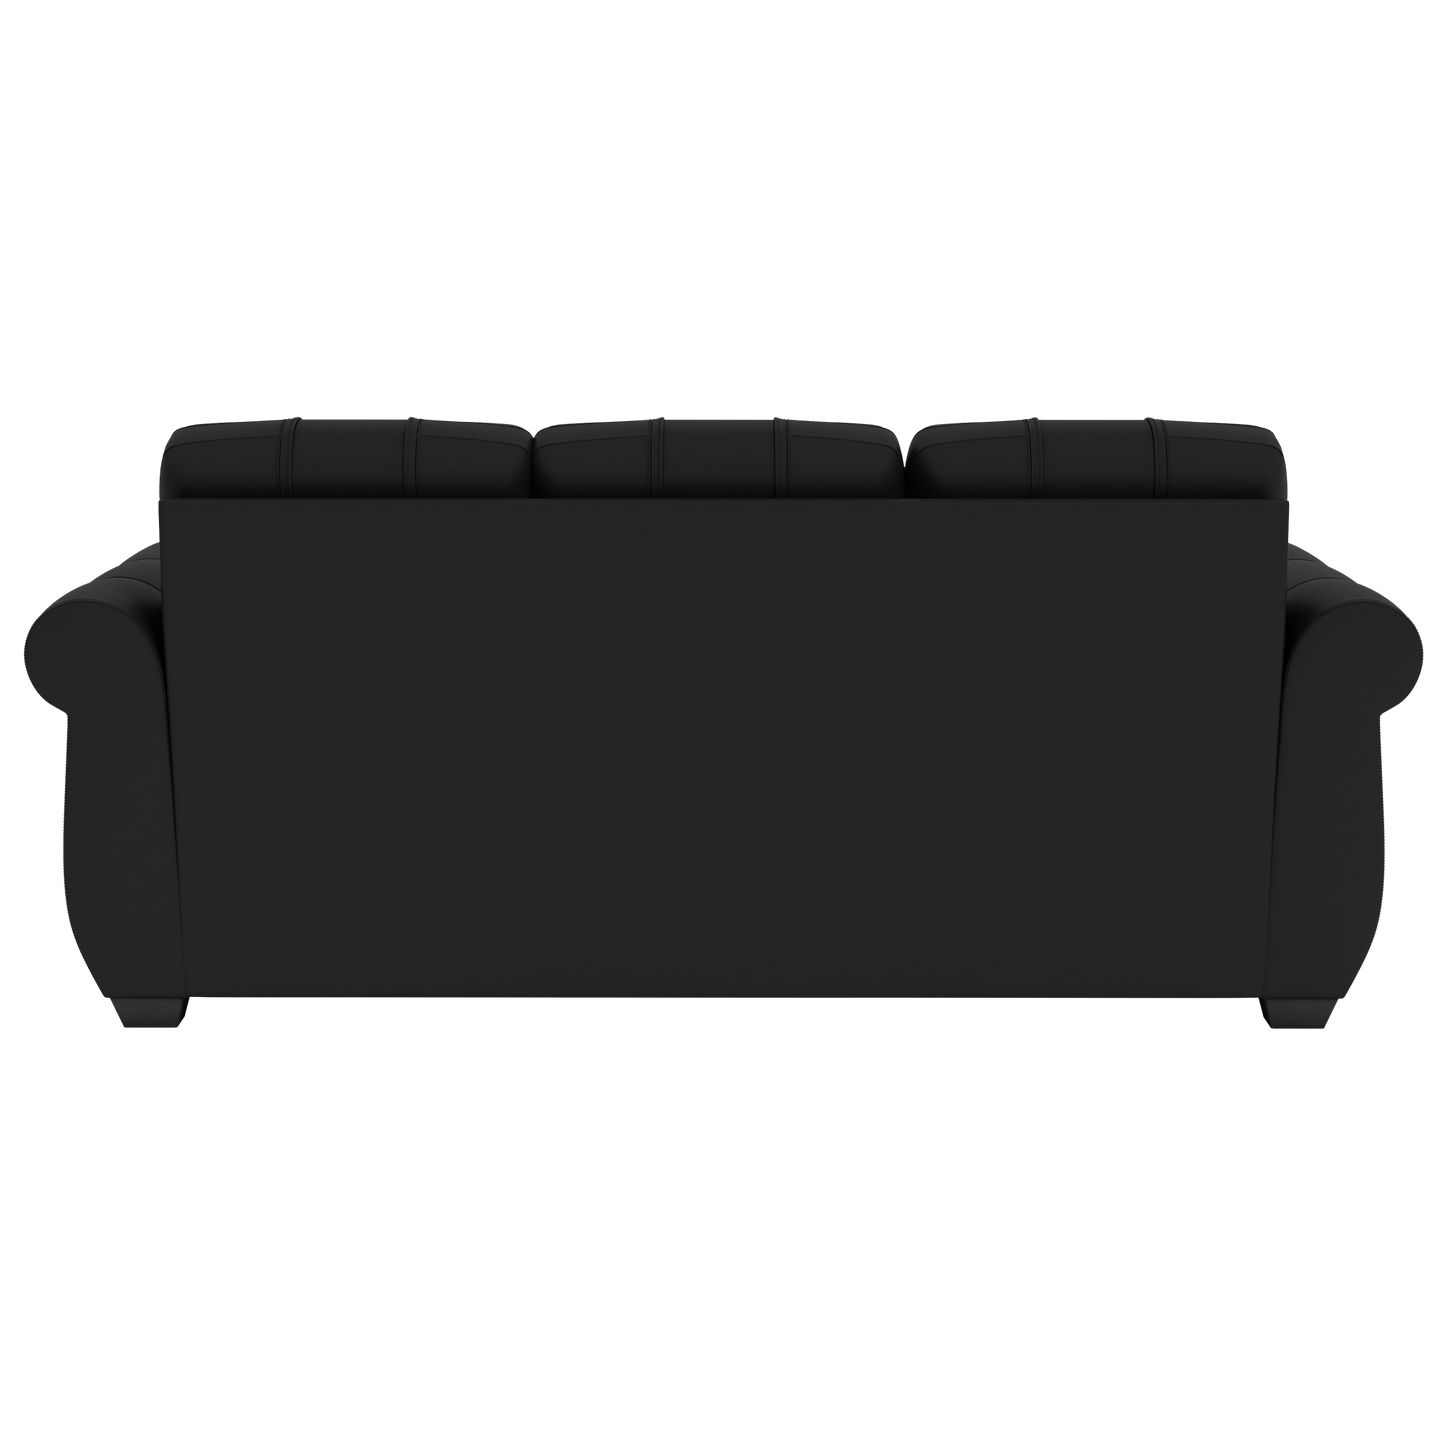 Chesapeake Stationary Sofa - Synthetic Leather (Custom Logo)